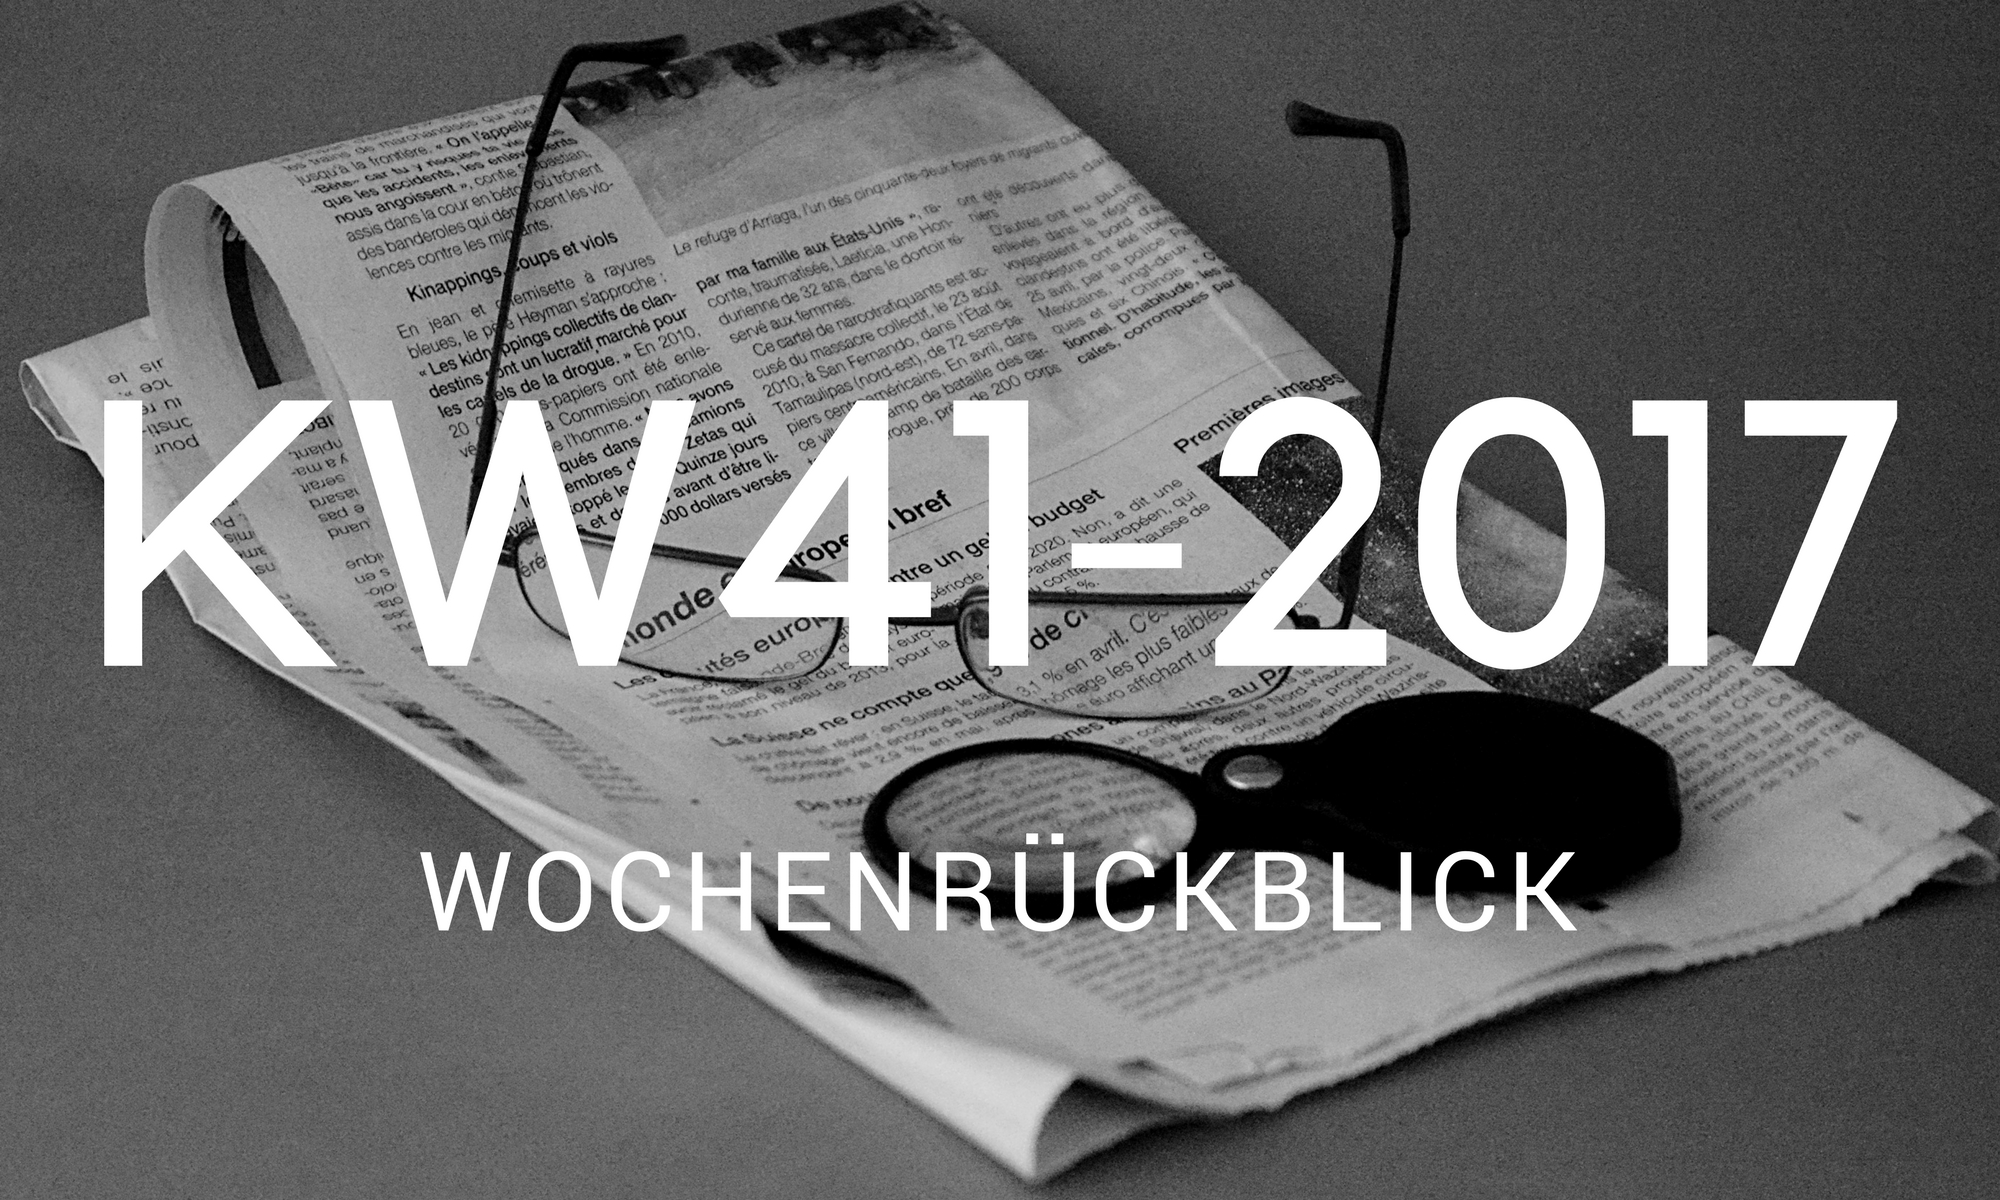 wochenrueckblick camping news KW41 2017